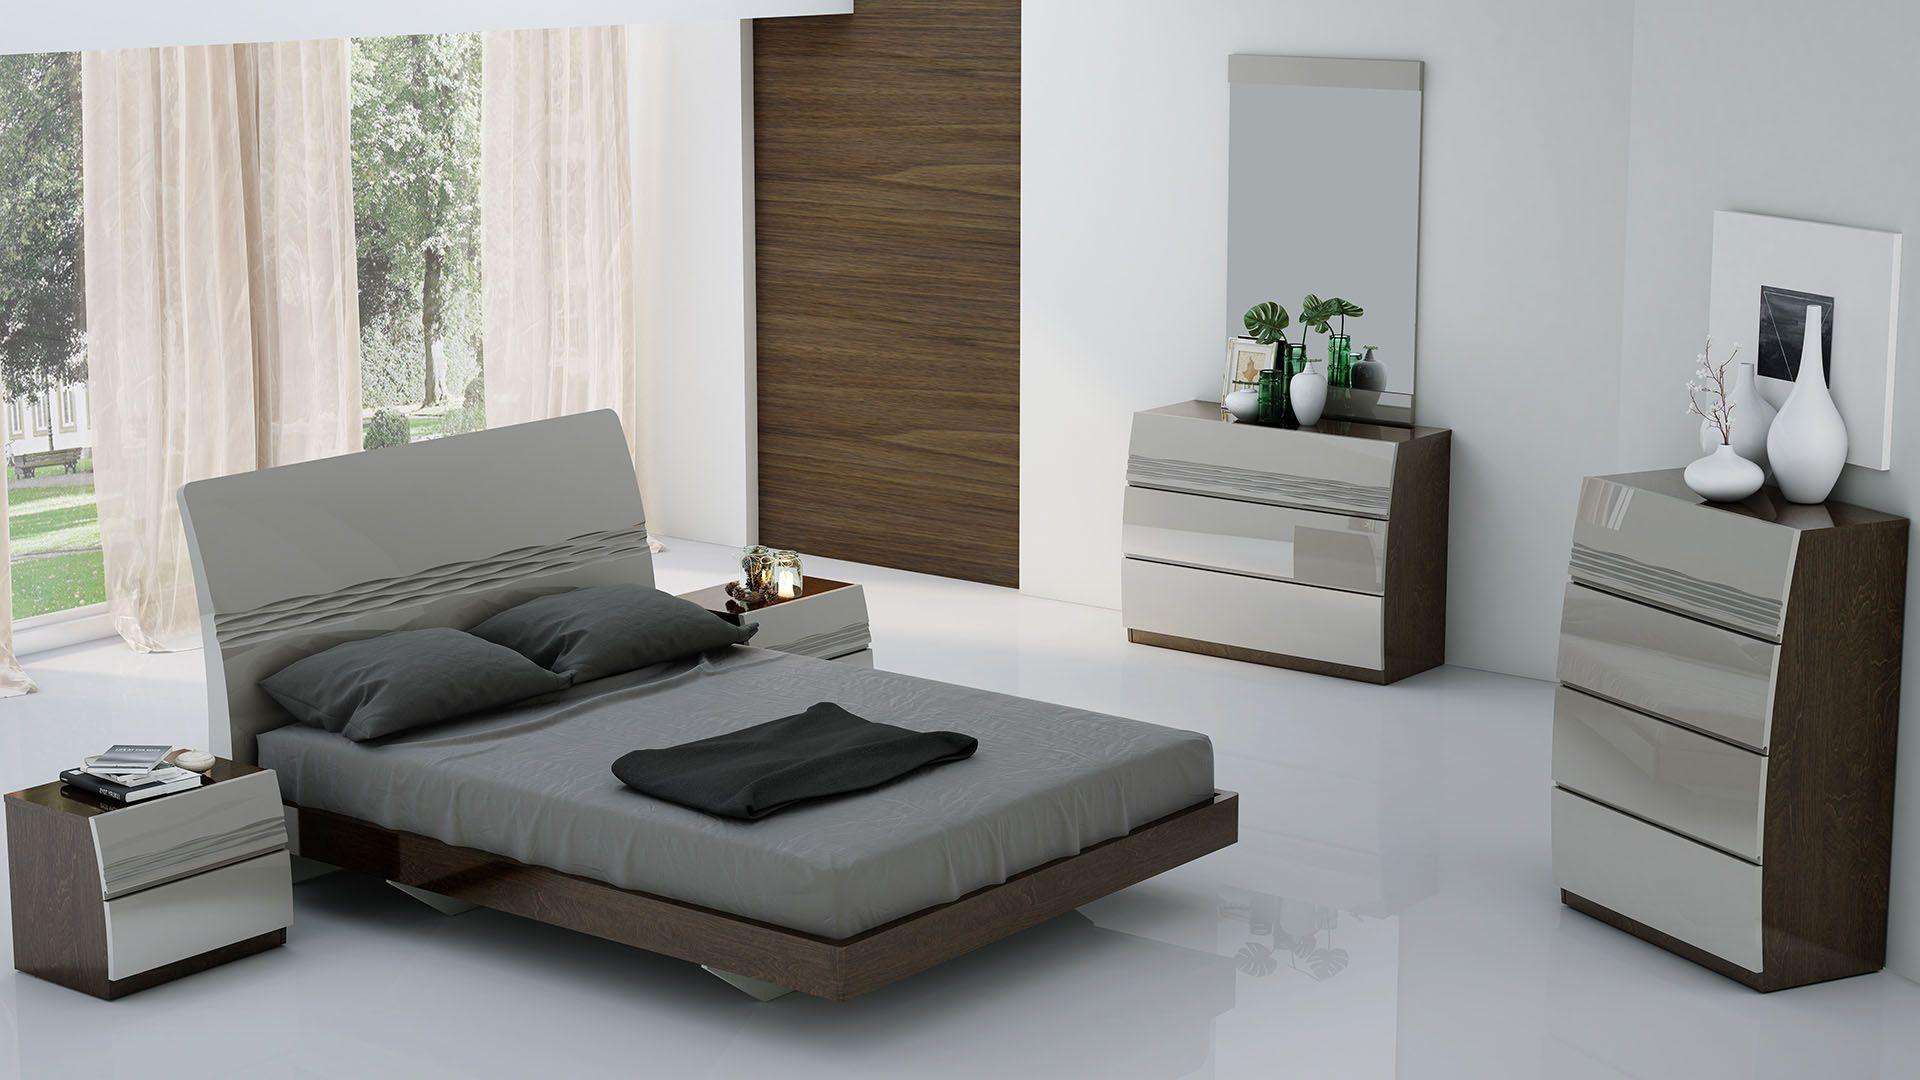 

                    
American Eagle Furniture B-P102 Platform Bedroom Set Brown/Light Gray  Purchase 
